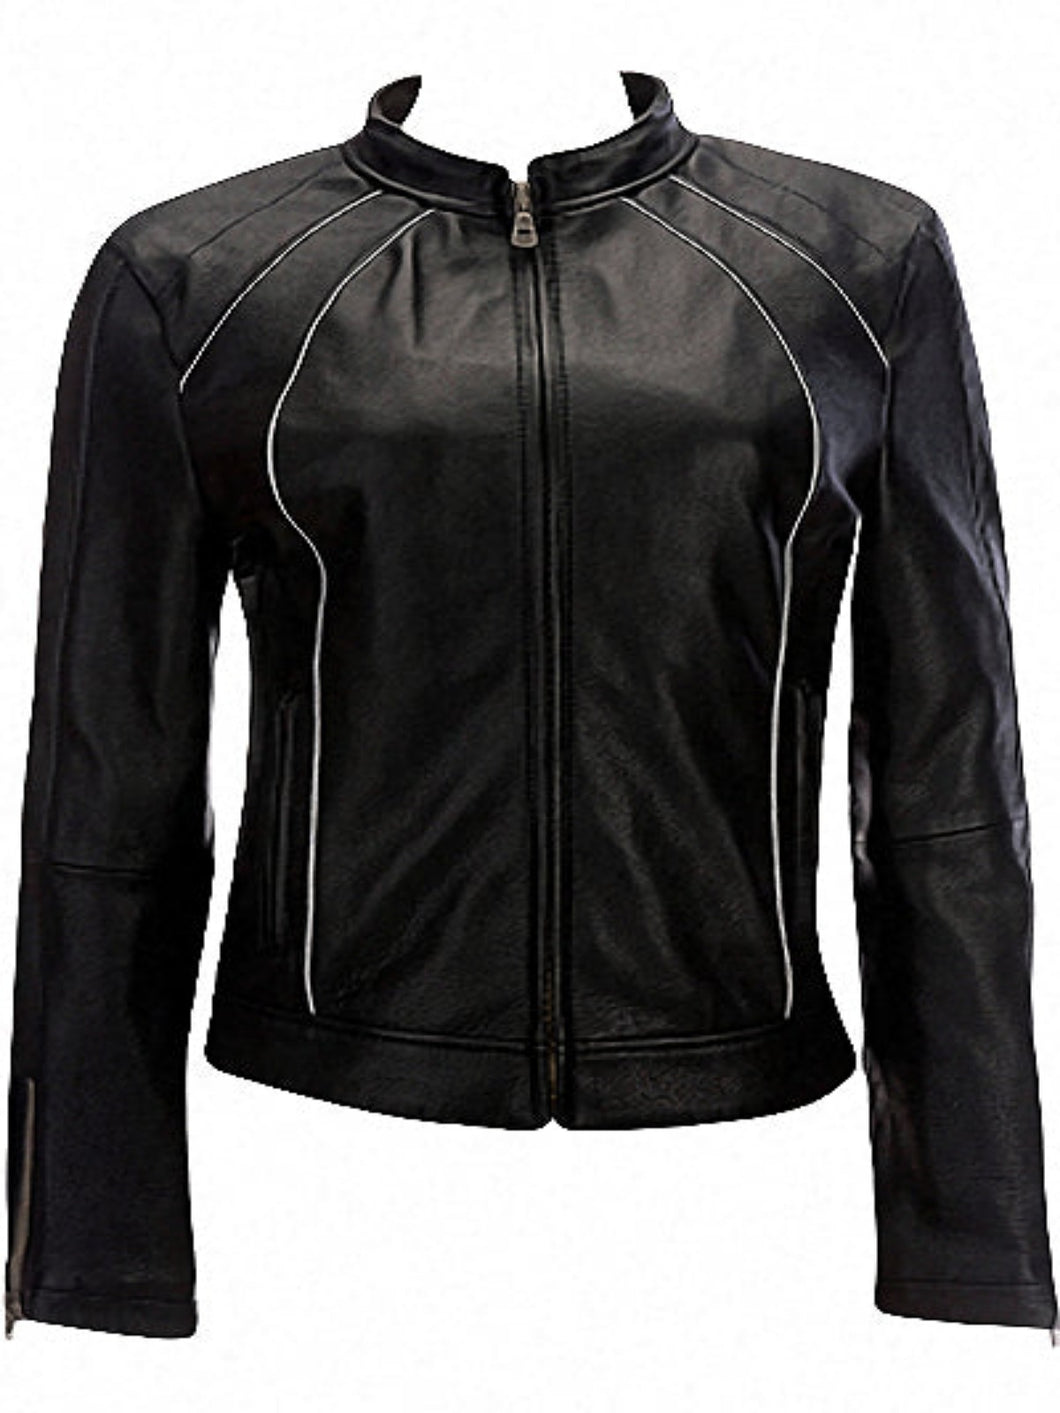 Womens Black Leather Street Smart Jacket